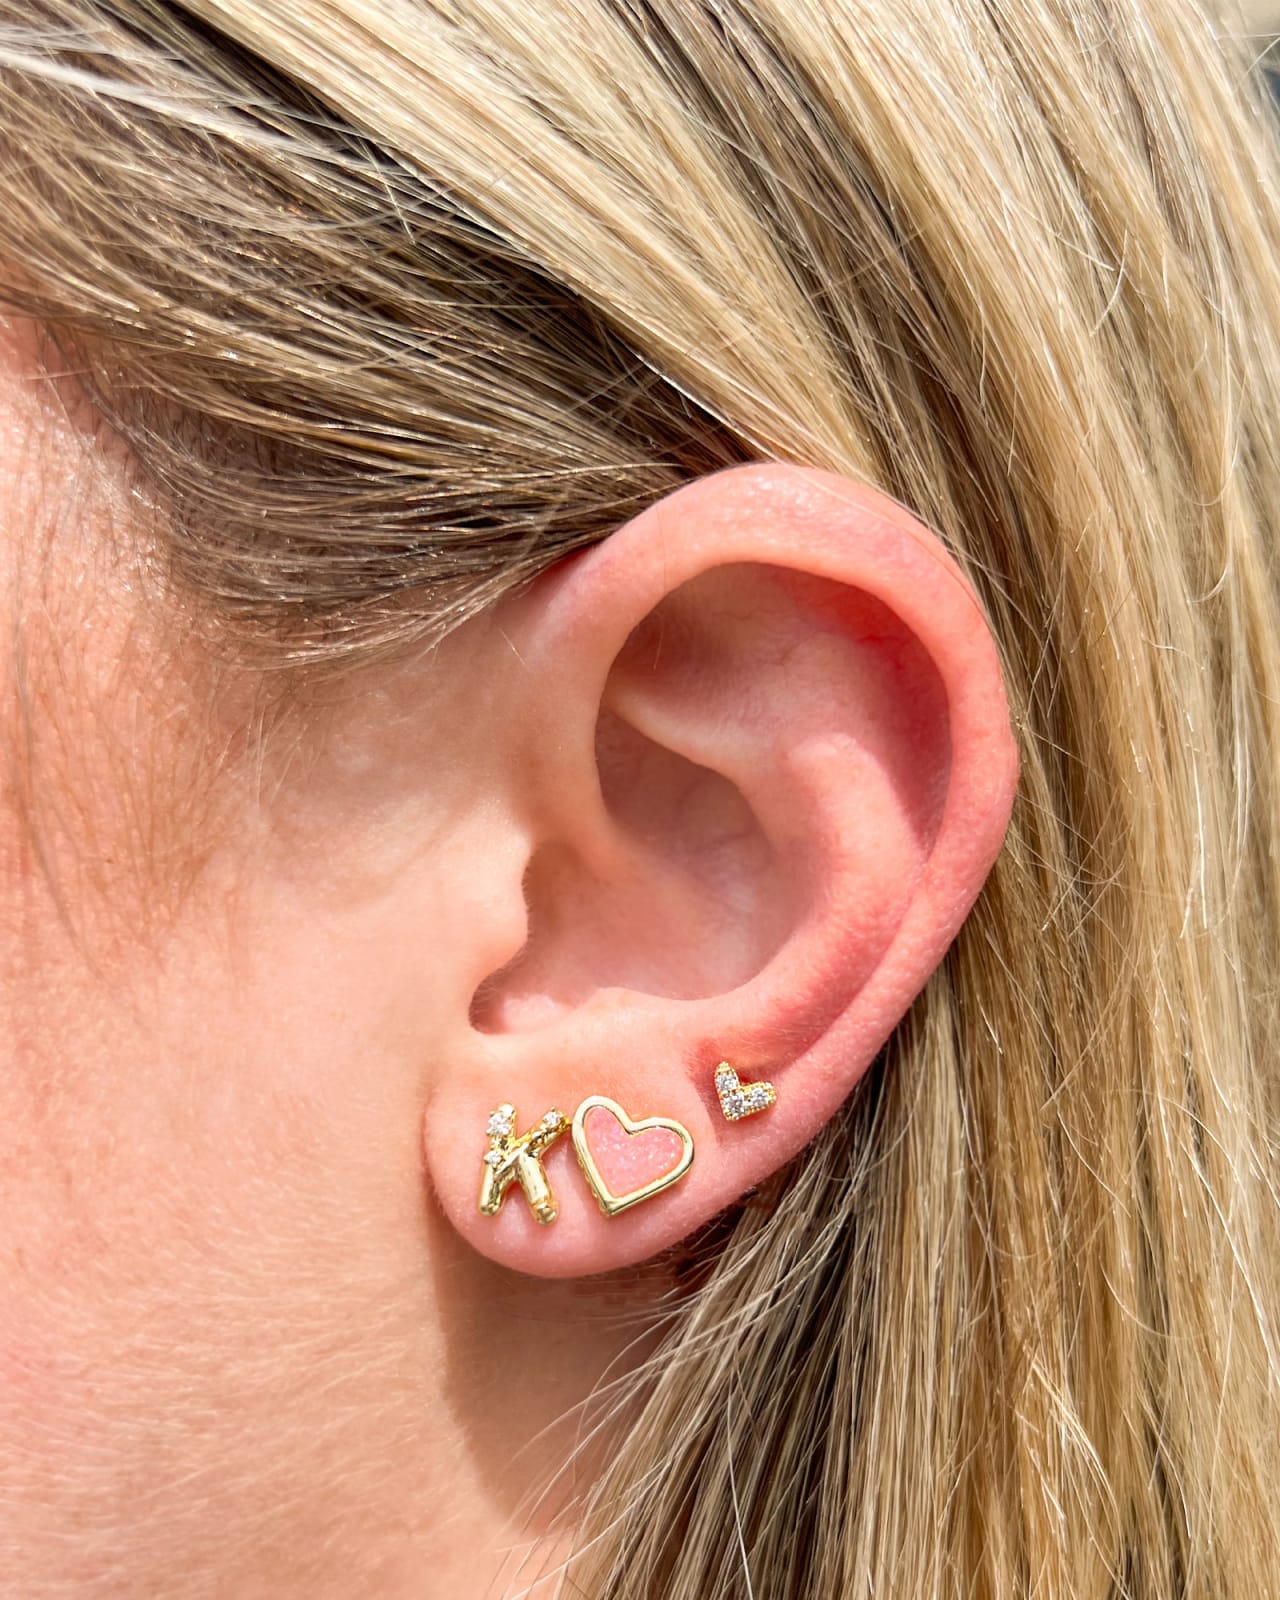 Ari Heart Rose Gold Stud Earrings in Light Pink Drusy